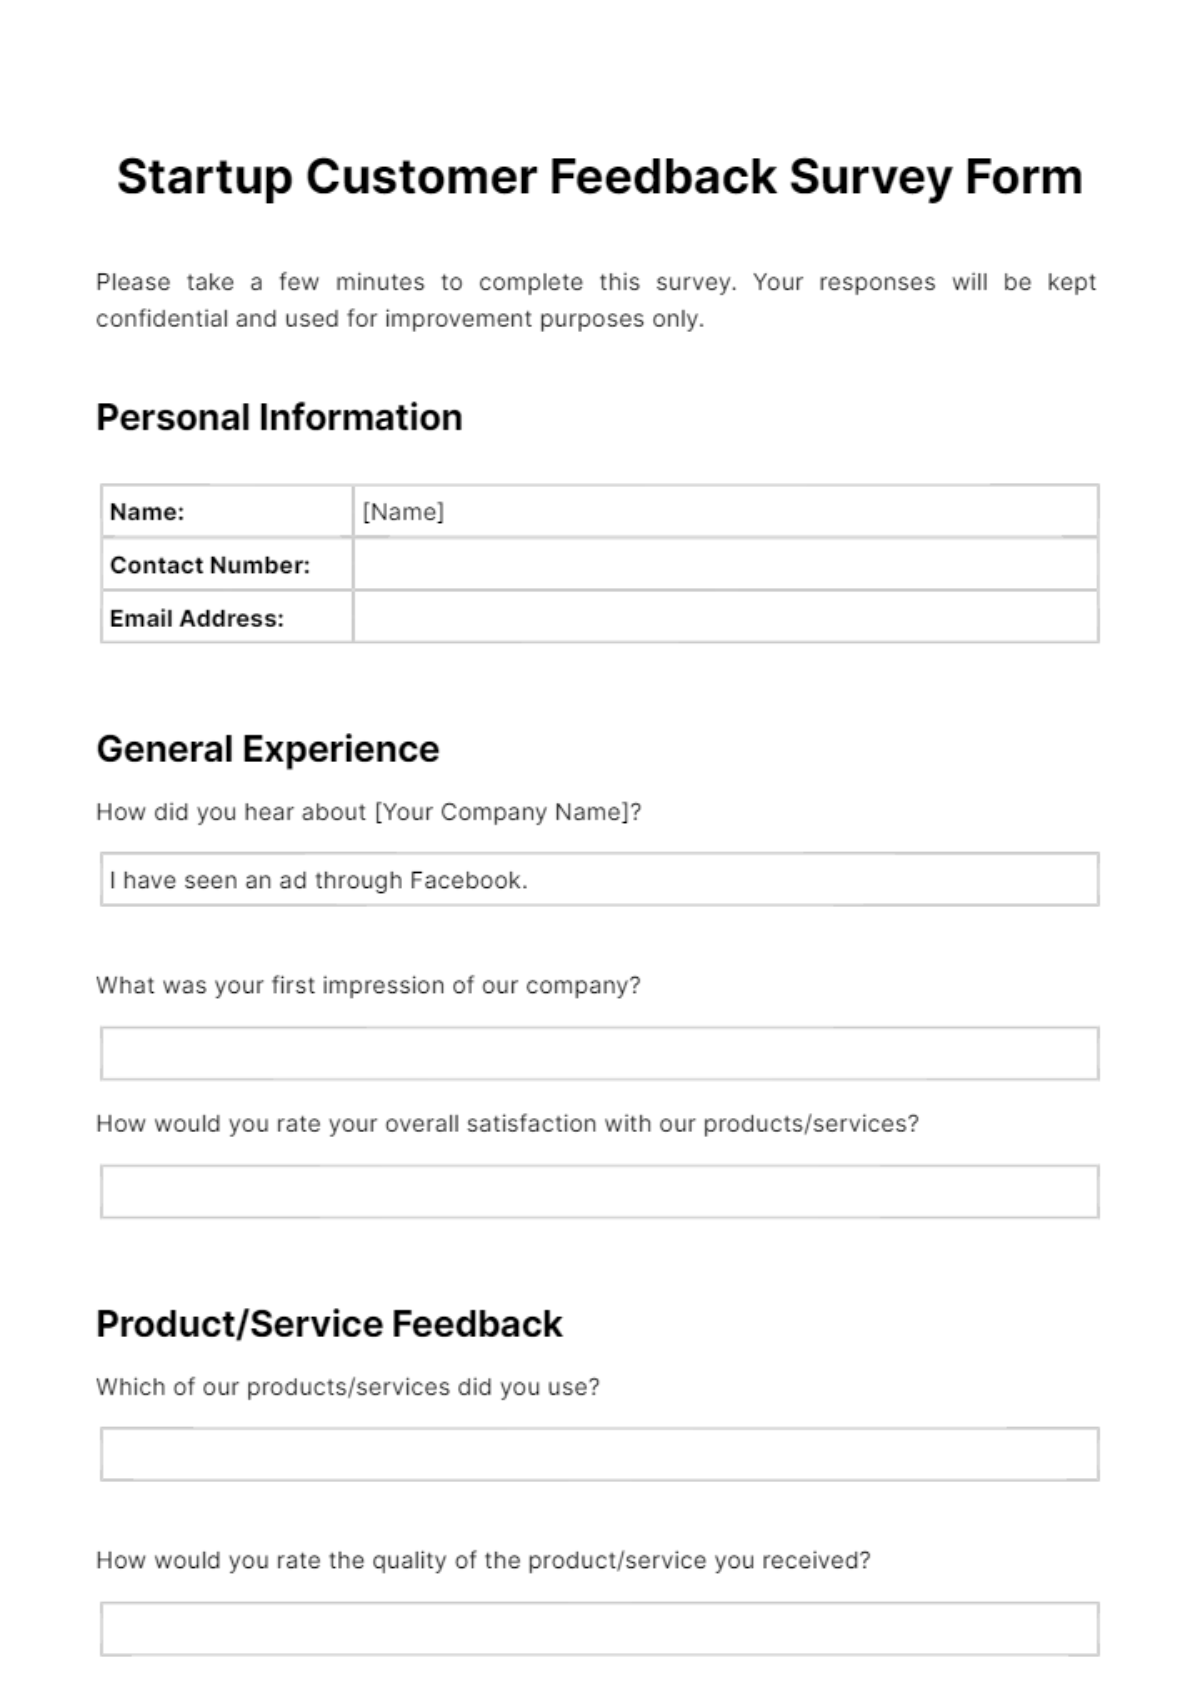 Startup Customer Feedback Survey Form Template